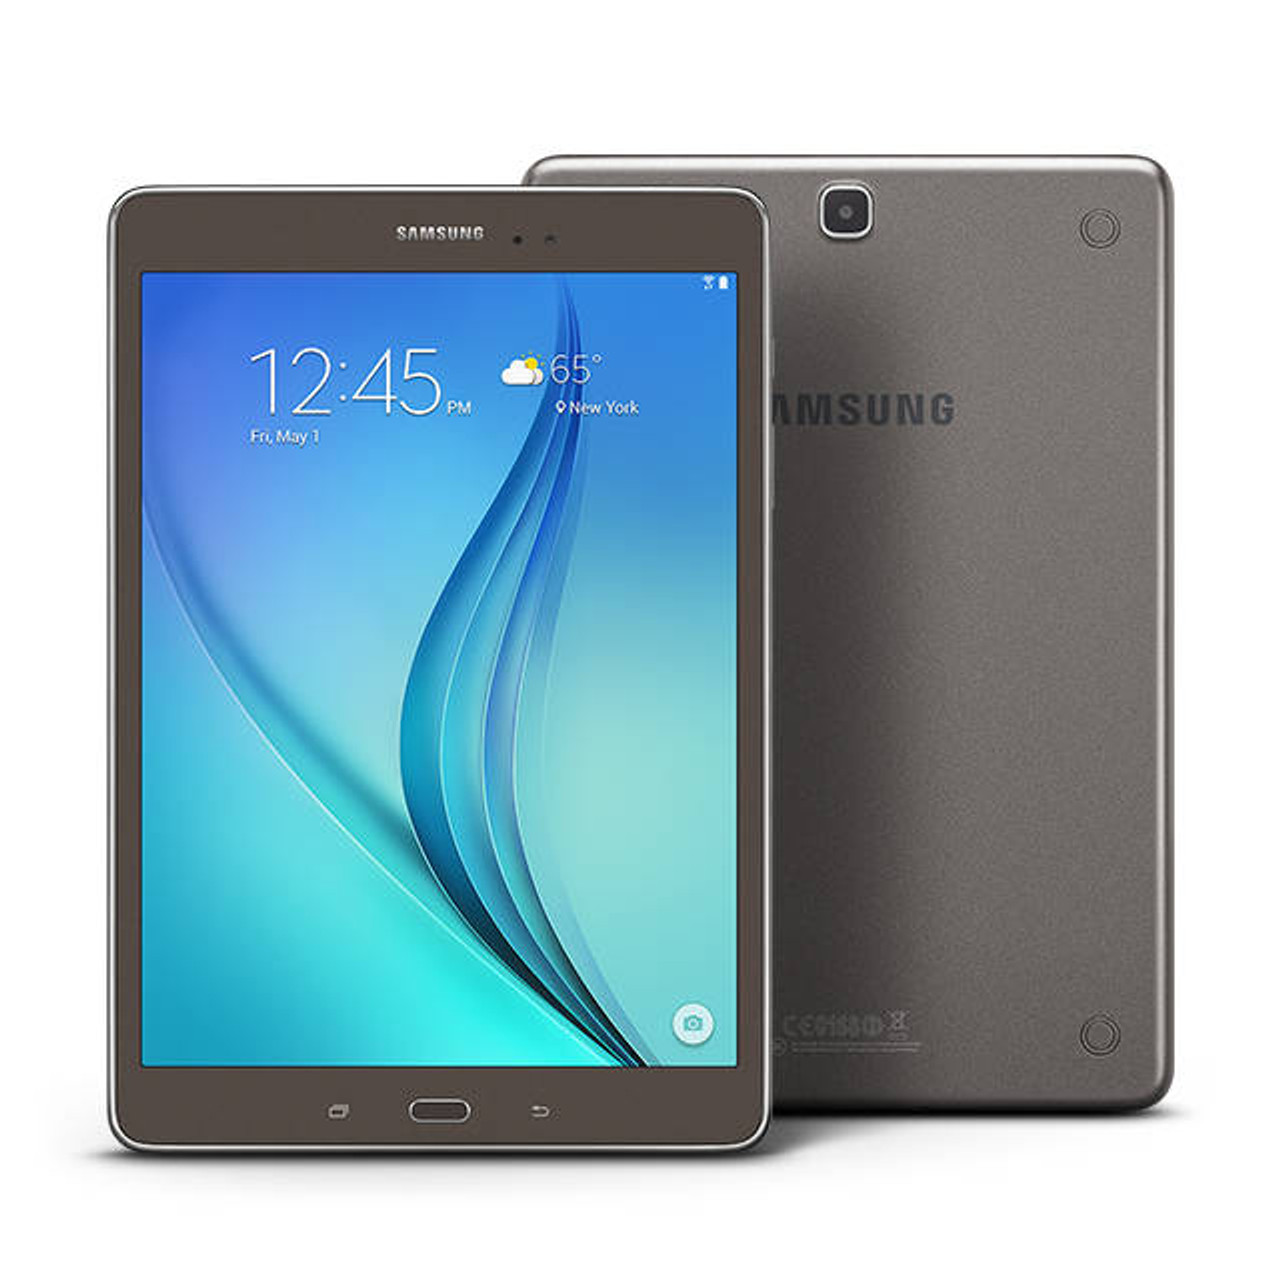 Samsung Galaxy Tab A SM-T550NZAAXAR 9.7 inch Qualcomm APQ 8016 1.2GHz/ 16GB/ Android 5.0 Lollipop Tablet (Smoky Titanium)